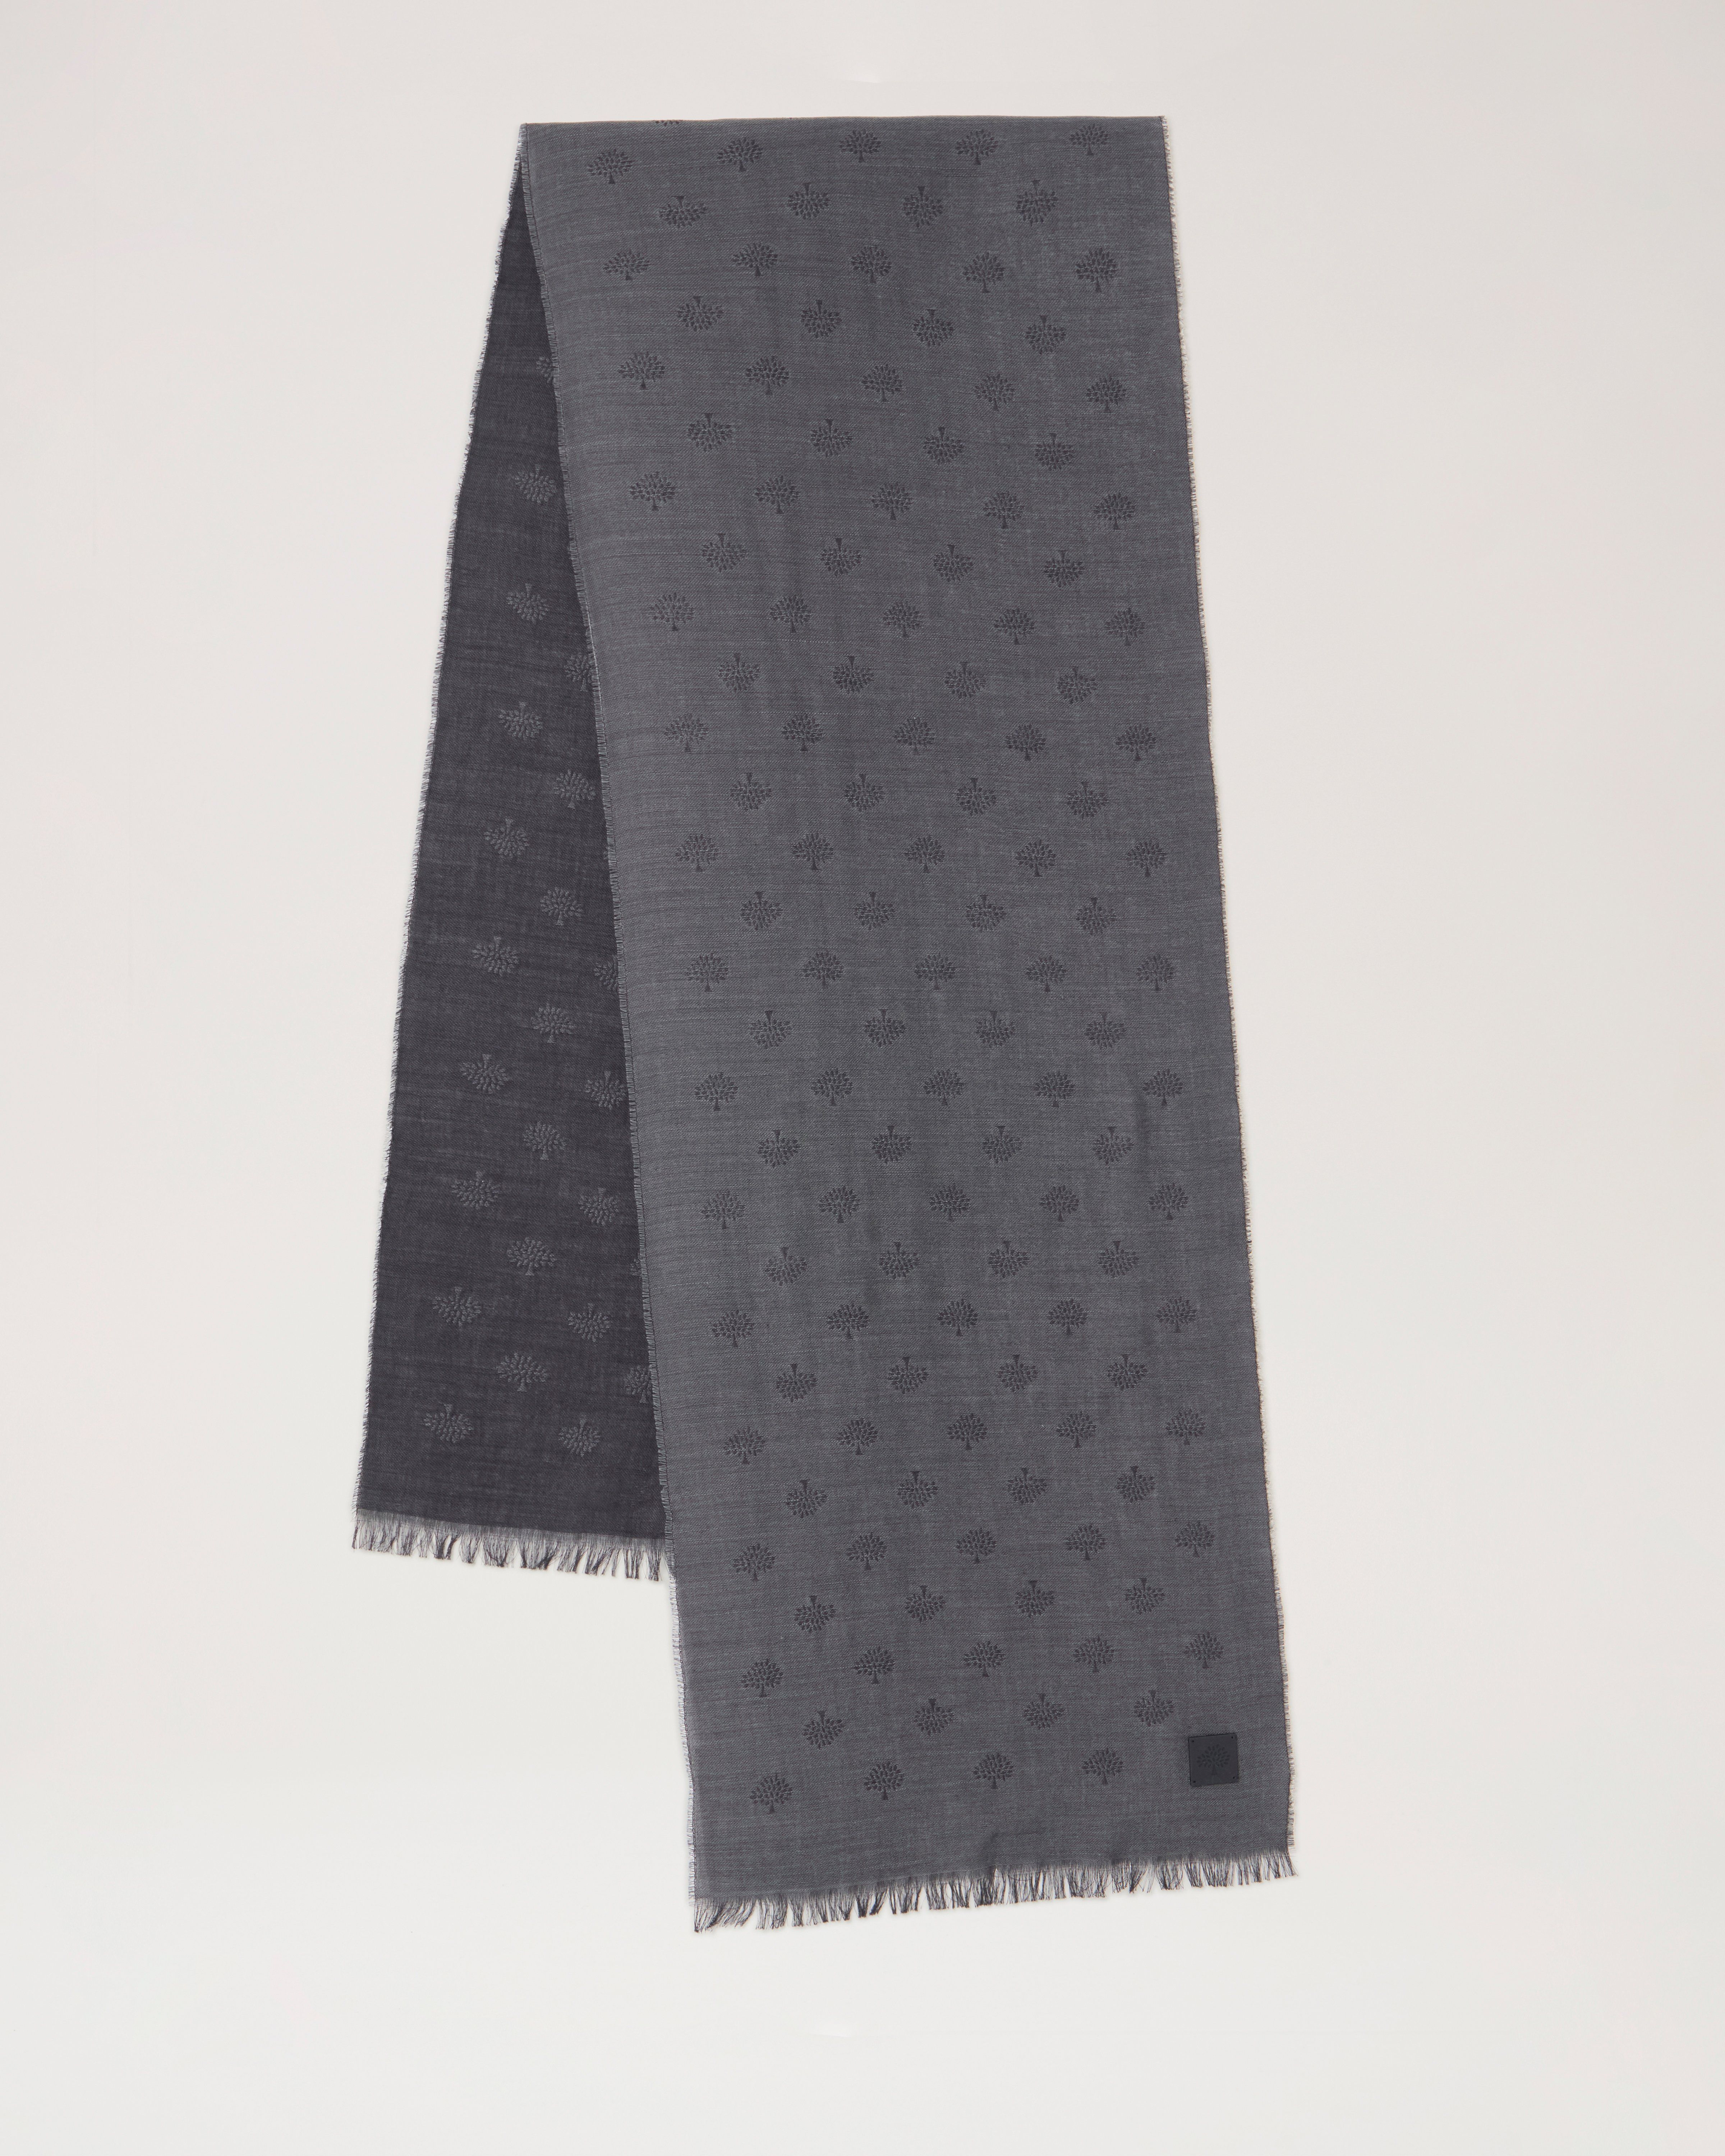 Jacquard Heavy Silk Cashmere Fabric for Winter - China Silk Cashmere and  Jacquard Cashmere price